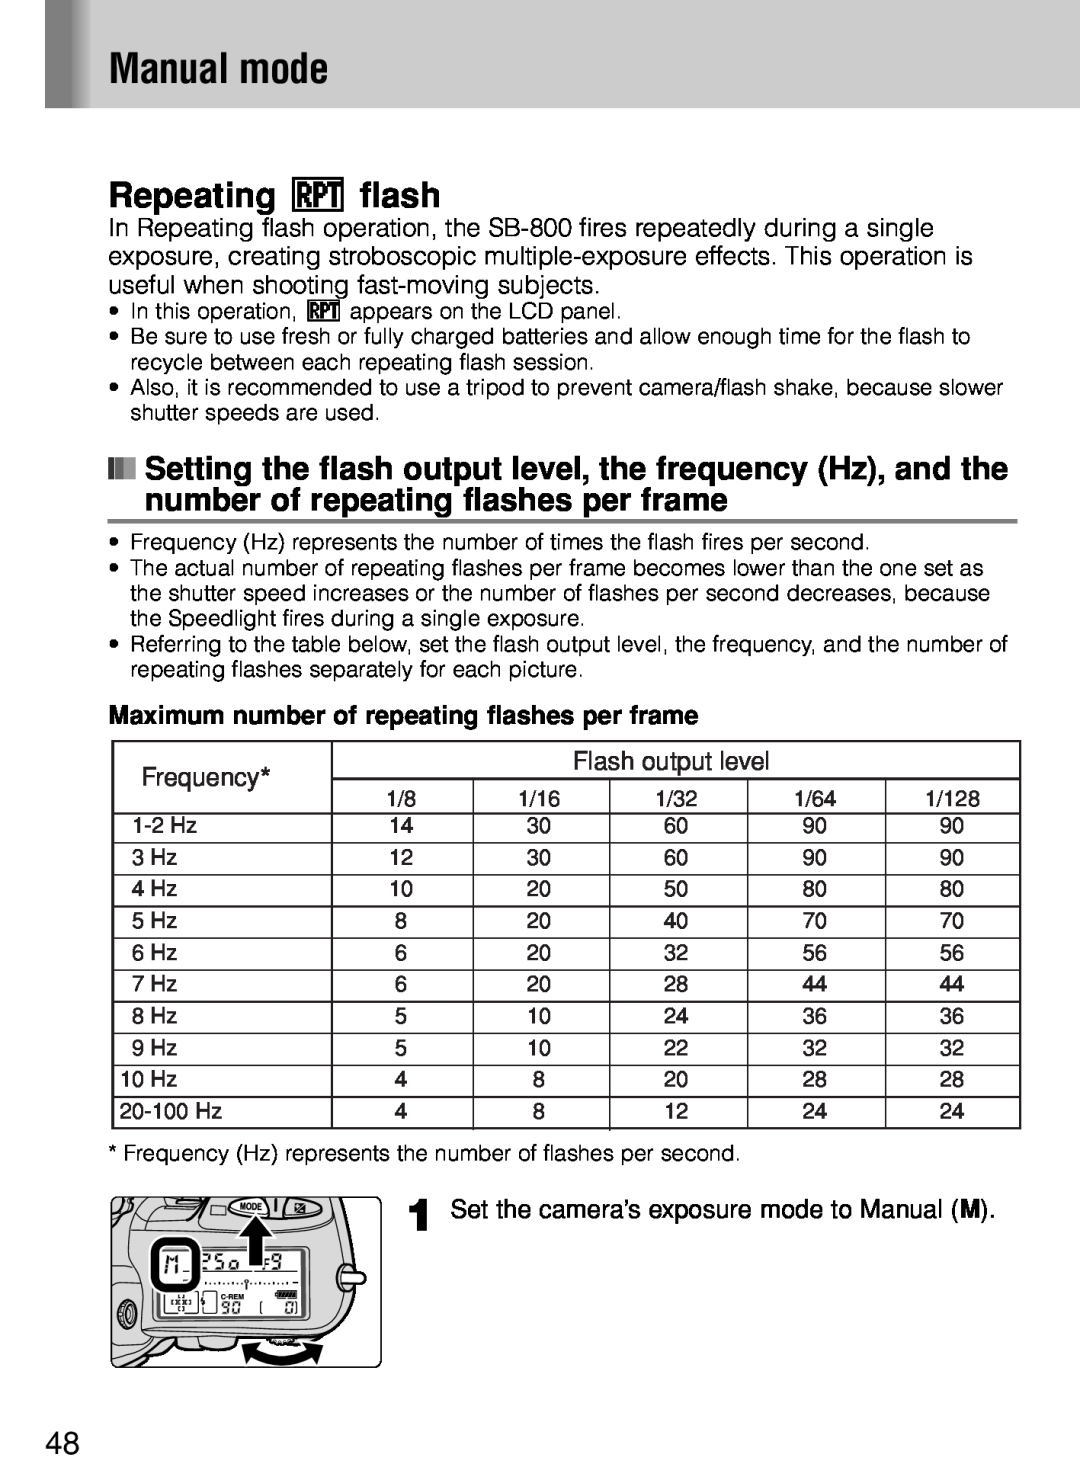 Nikon SB-800 instruction manual Repeating q flash, Manual mode, Maximum number of repeating flashes per frame 